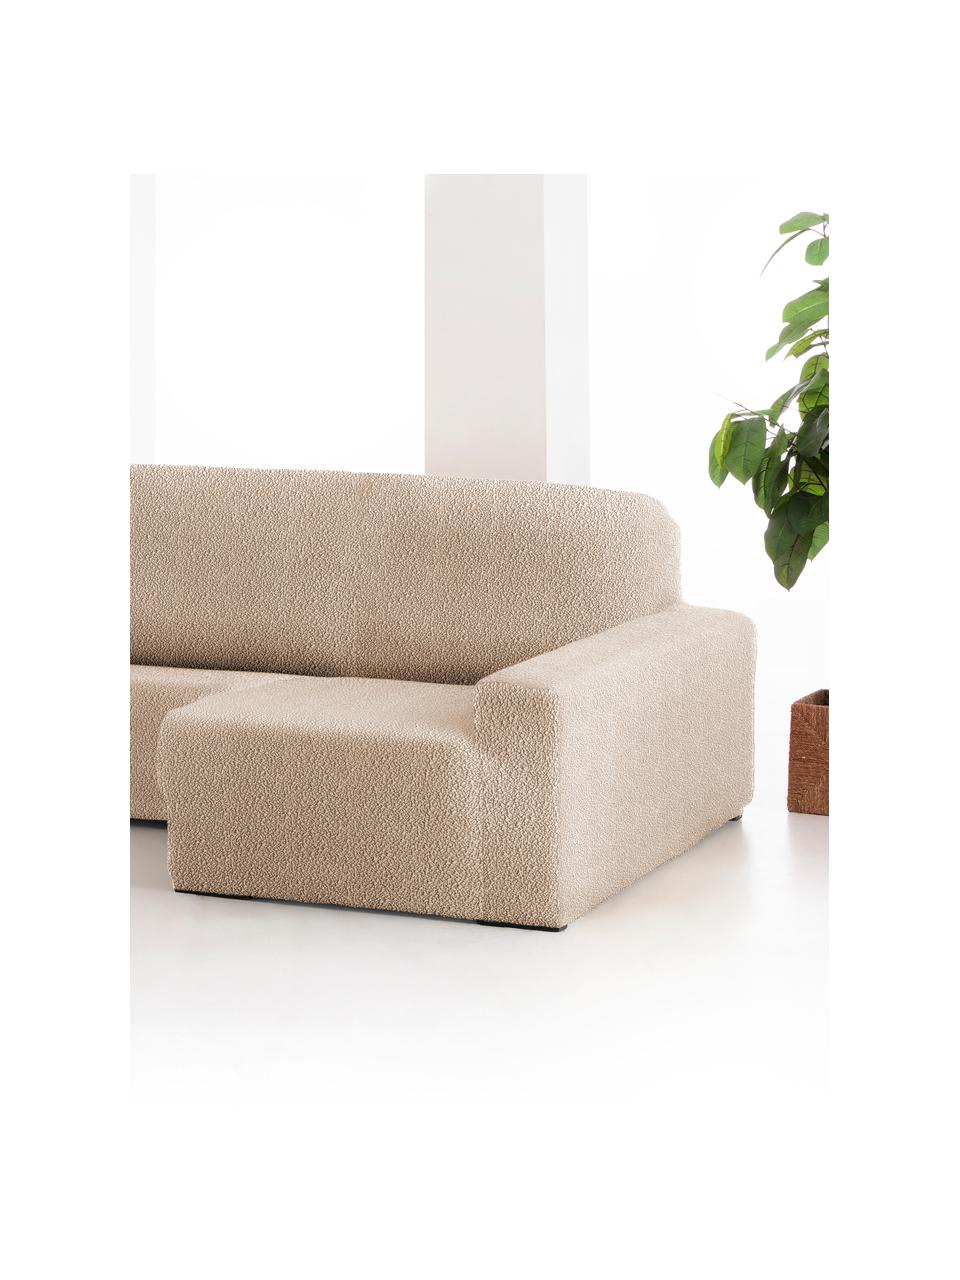 Copertura divano angolare Roc, 55% poliestere, 35% cotone, 10% elastomero, Beige, Larg. 360 x Alt. 180 cm, chaise-longue a destra